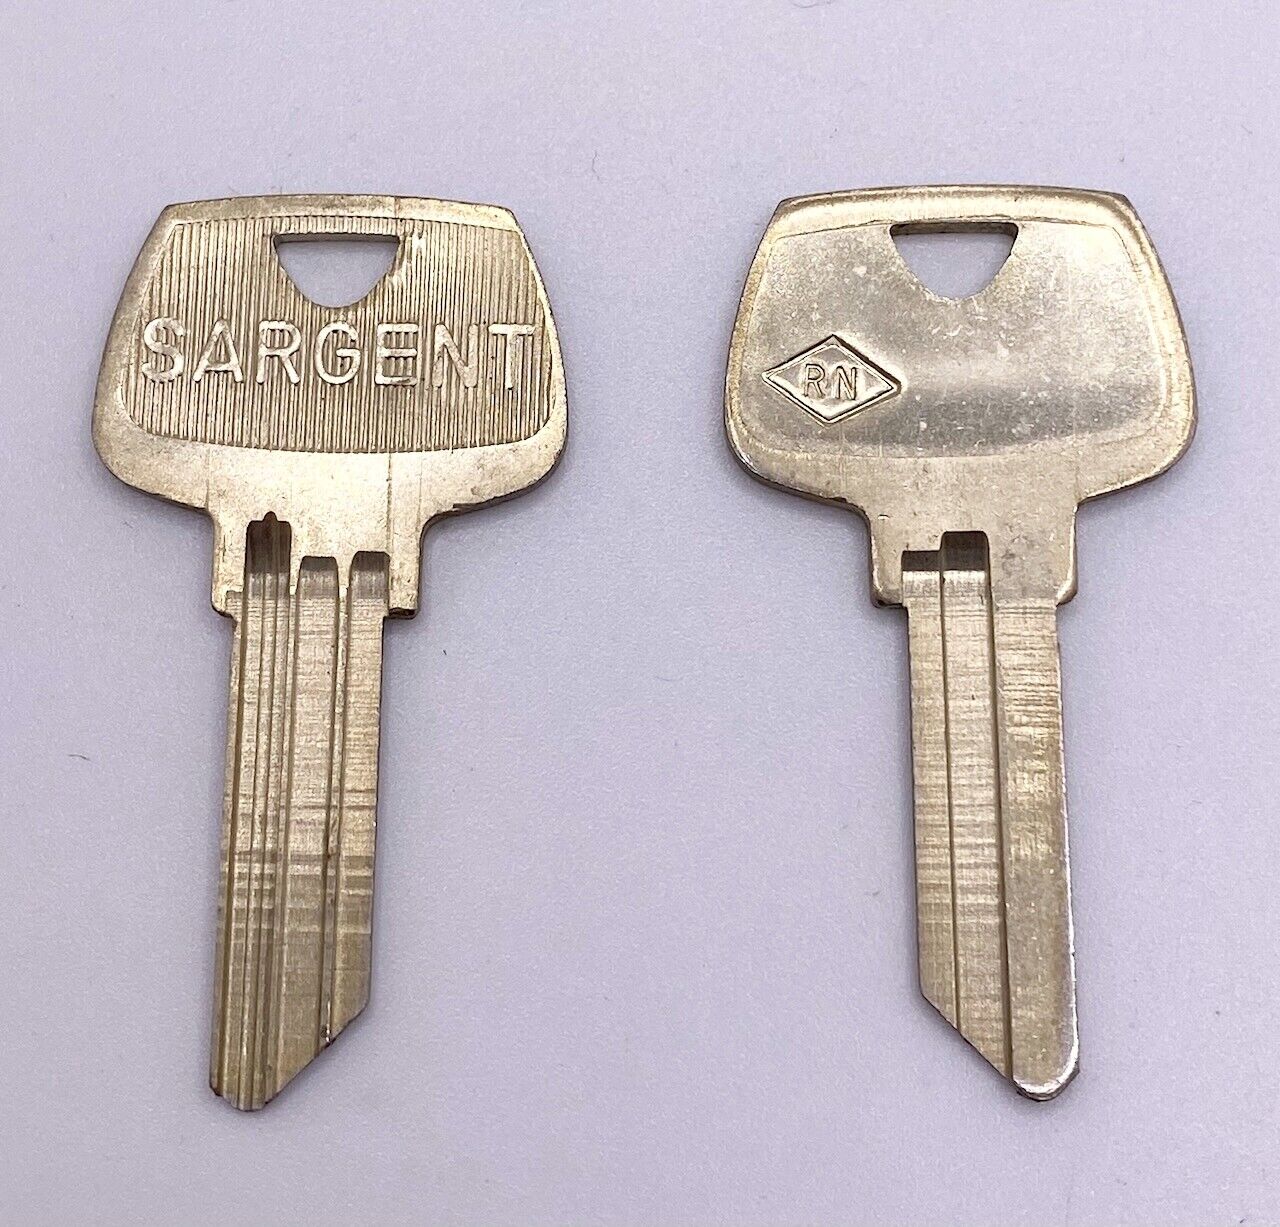 Sargent 270 RN 5-Pin Key Blanks. 24 nickel silver key blanks.